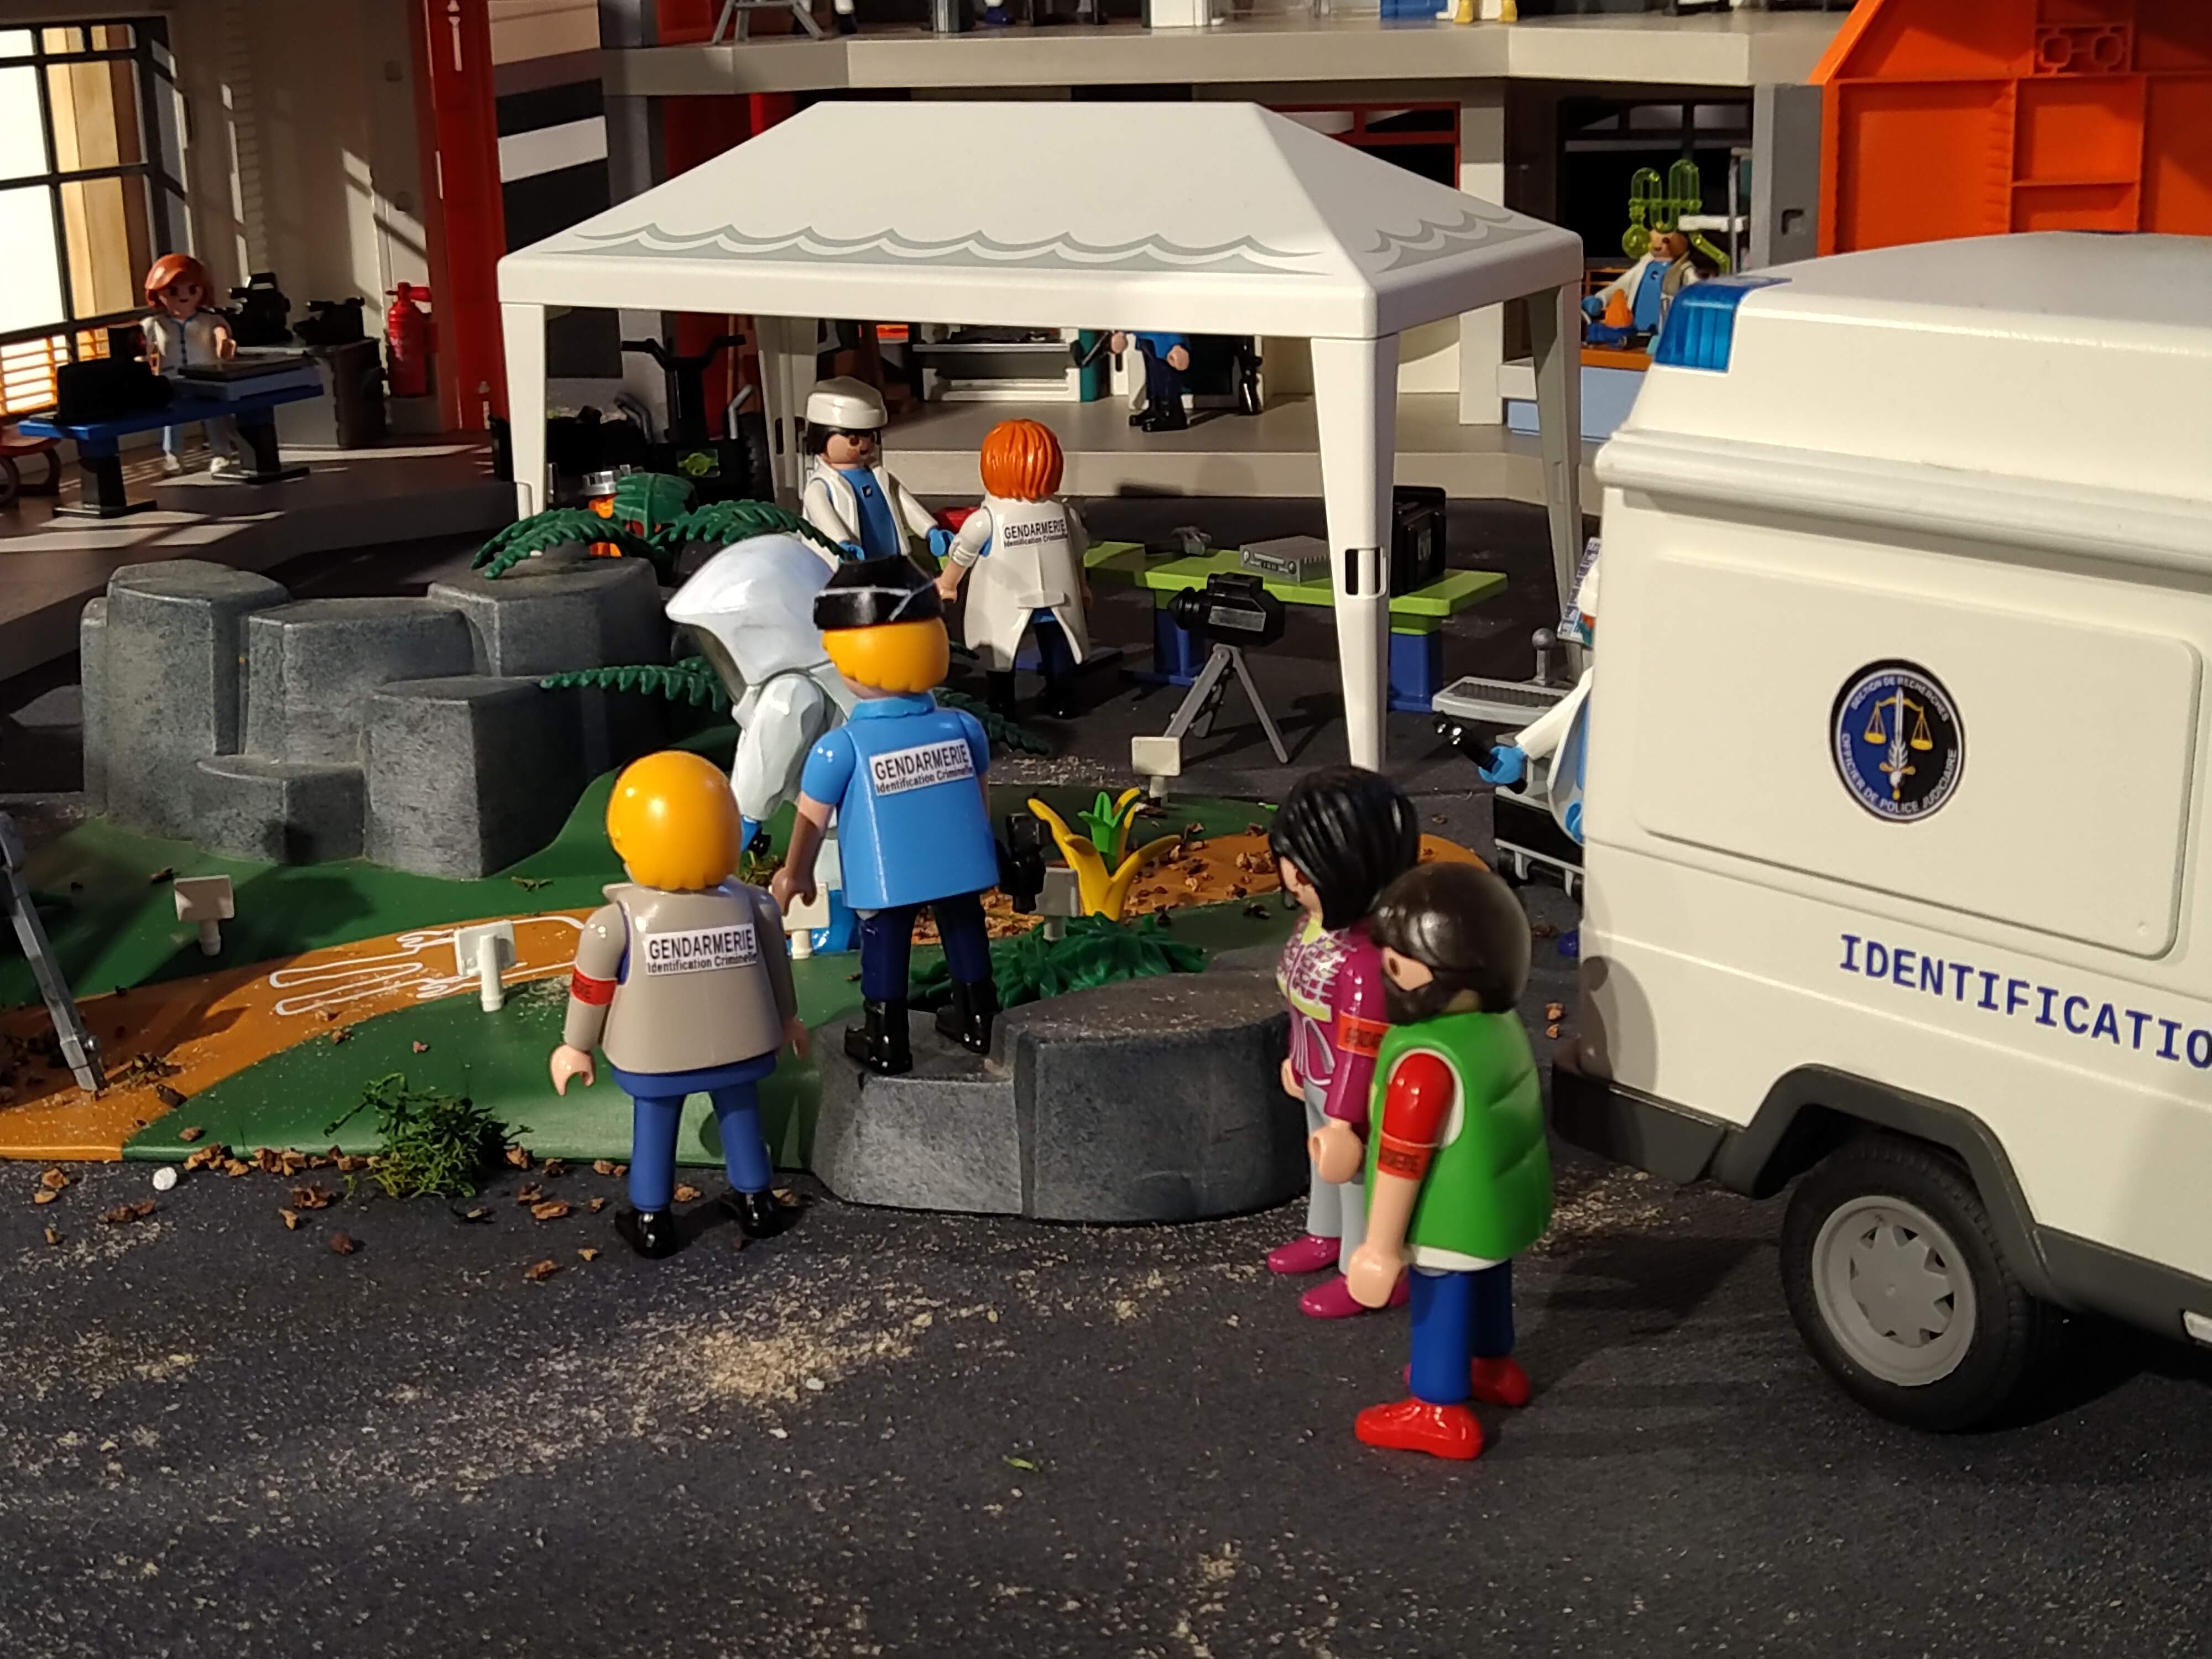 Gendarmerie scientifique identification en playmobil